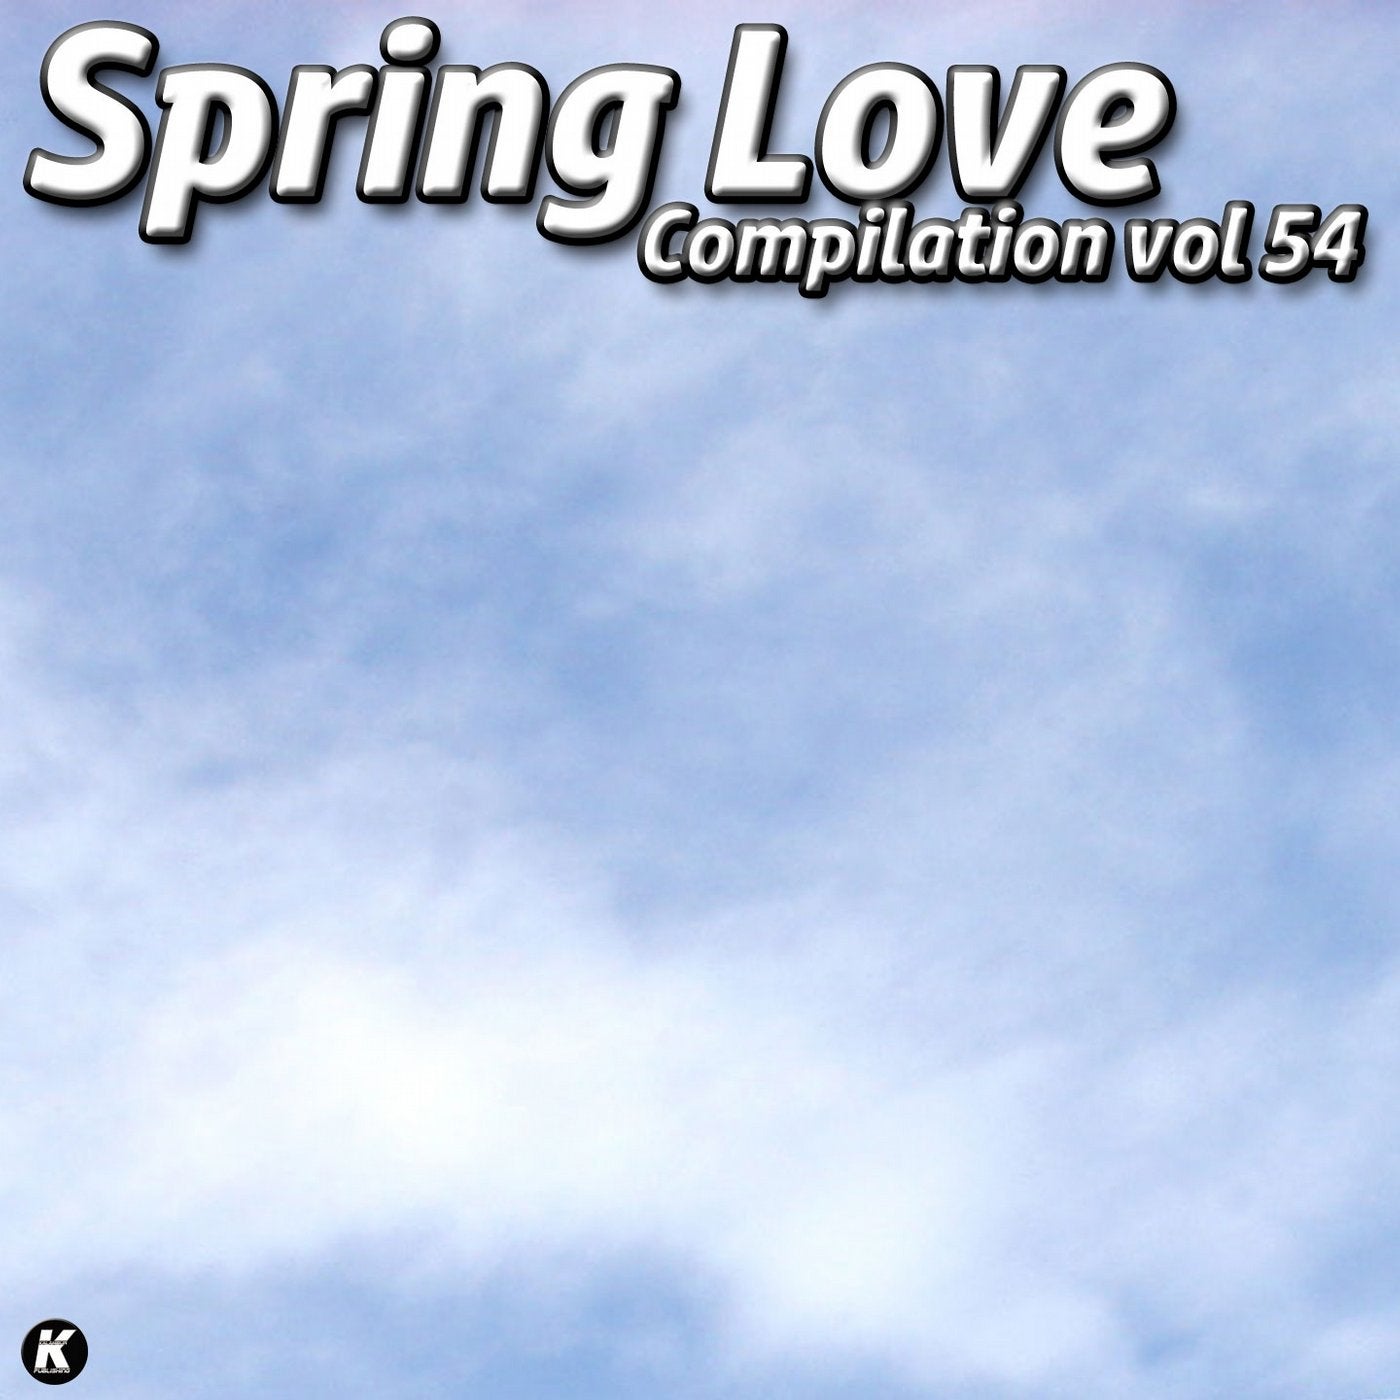 SPRING LOVE COMPILATION VOL 54